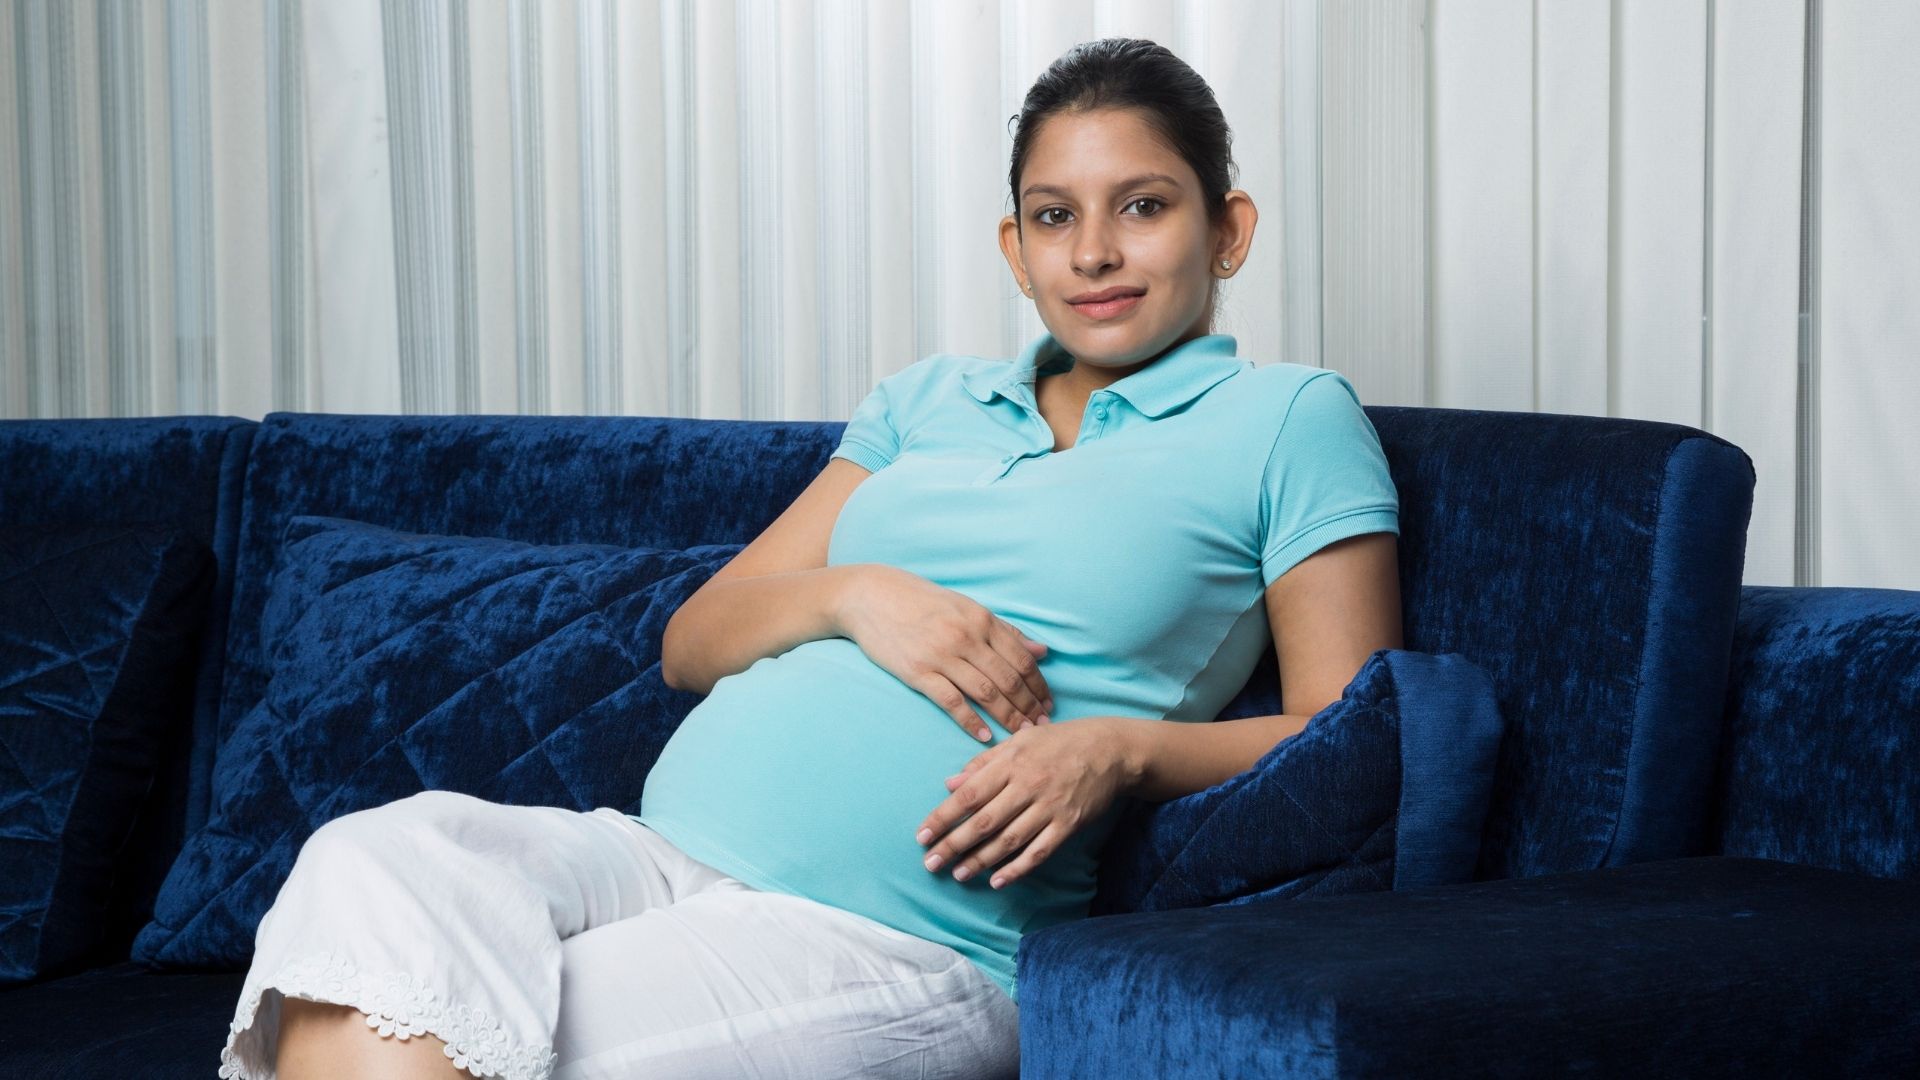 COMMON DISCOMFORTS OF PREGNANCY